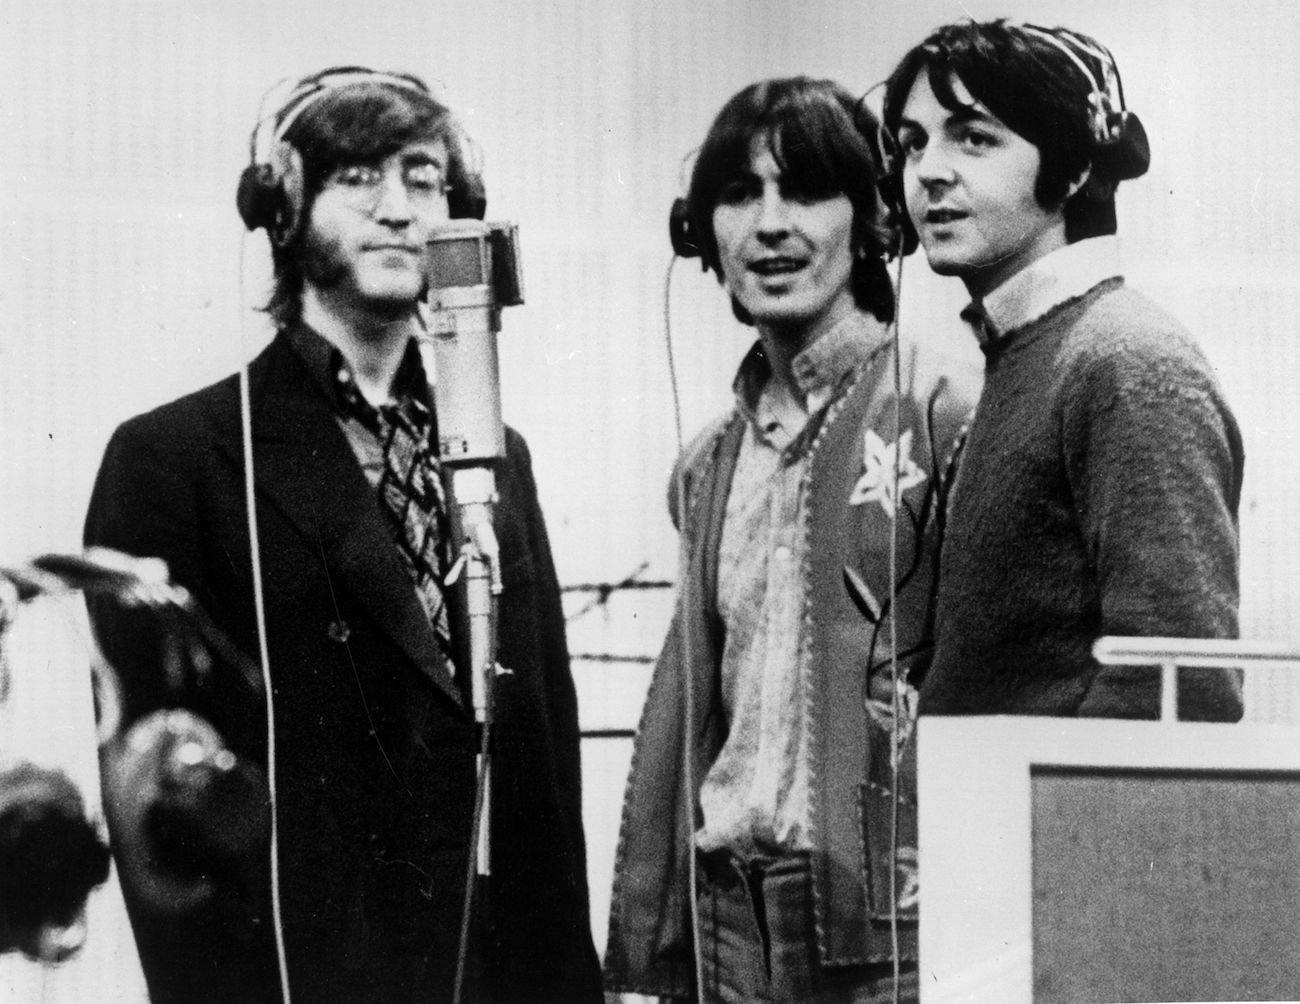 The Beatles recording 'Yellow Submarine' in the studio.